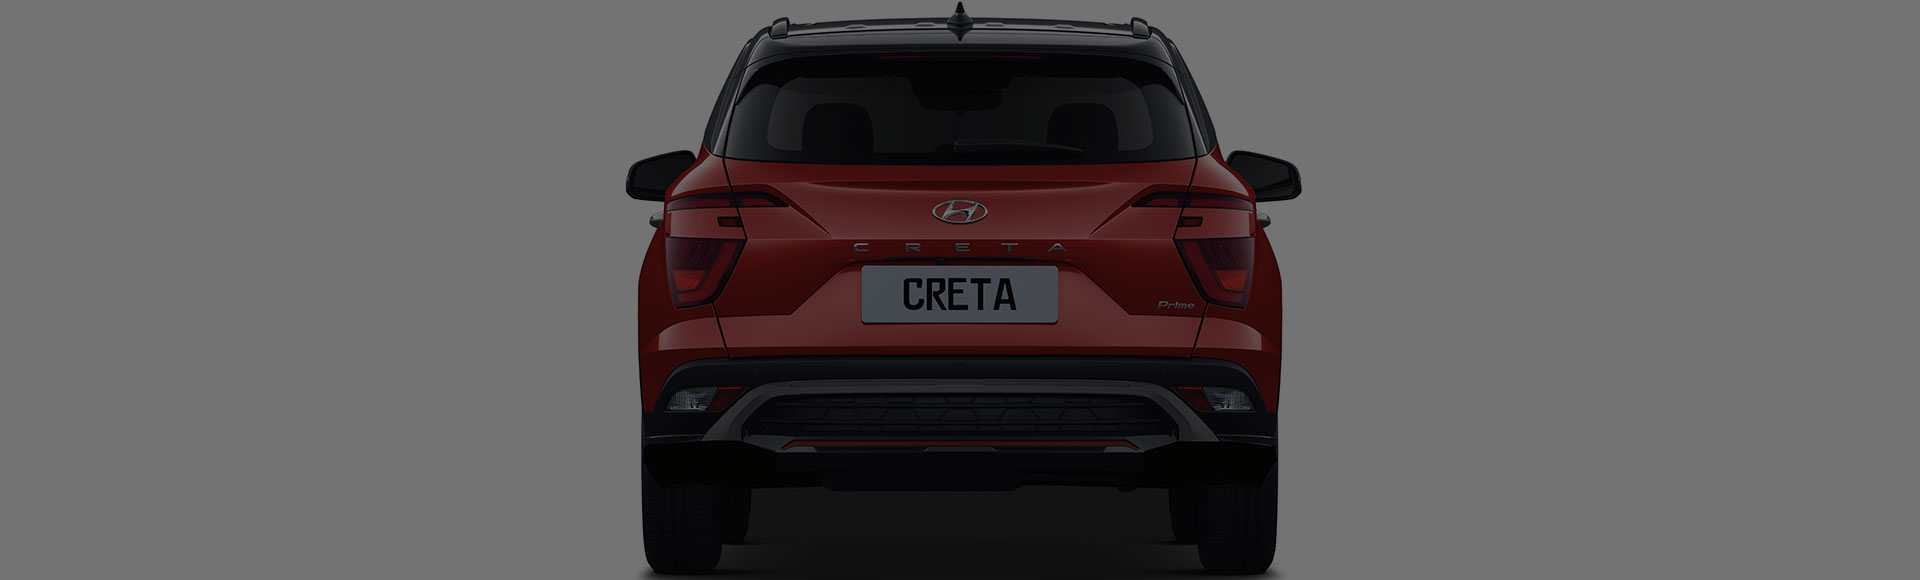 Creta 2021 exterior rear design